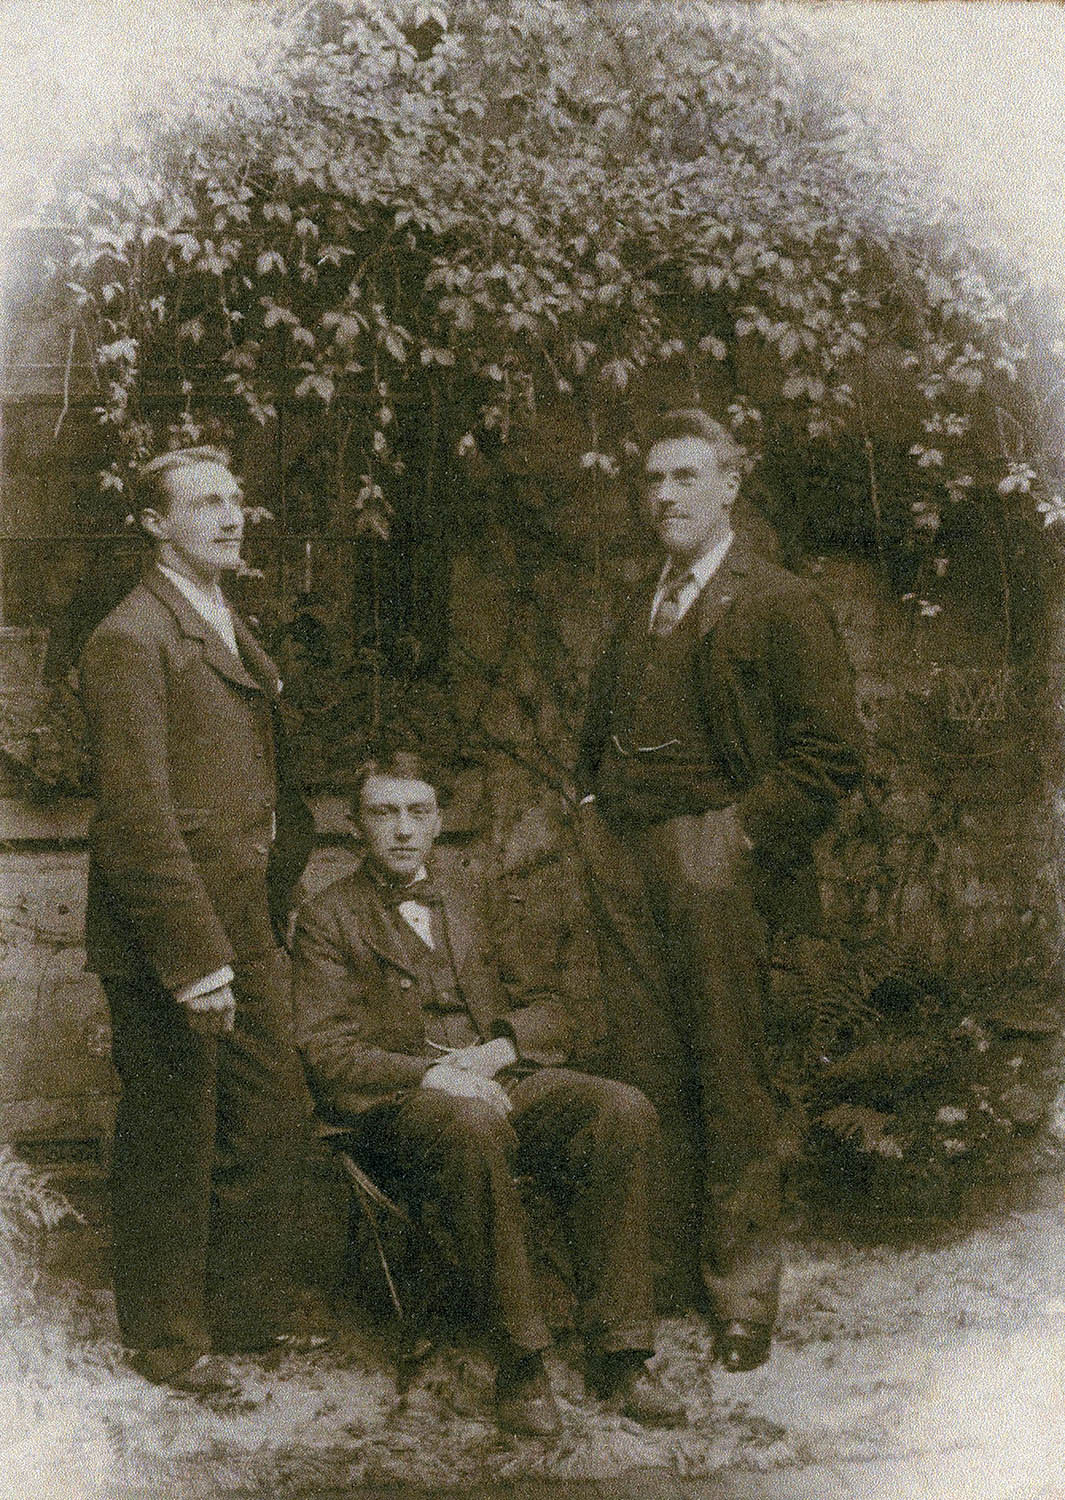 Photo of Arthur Lee Glover, Joseph Samual Glover and Thomas Lee Glover.